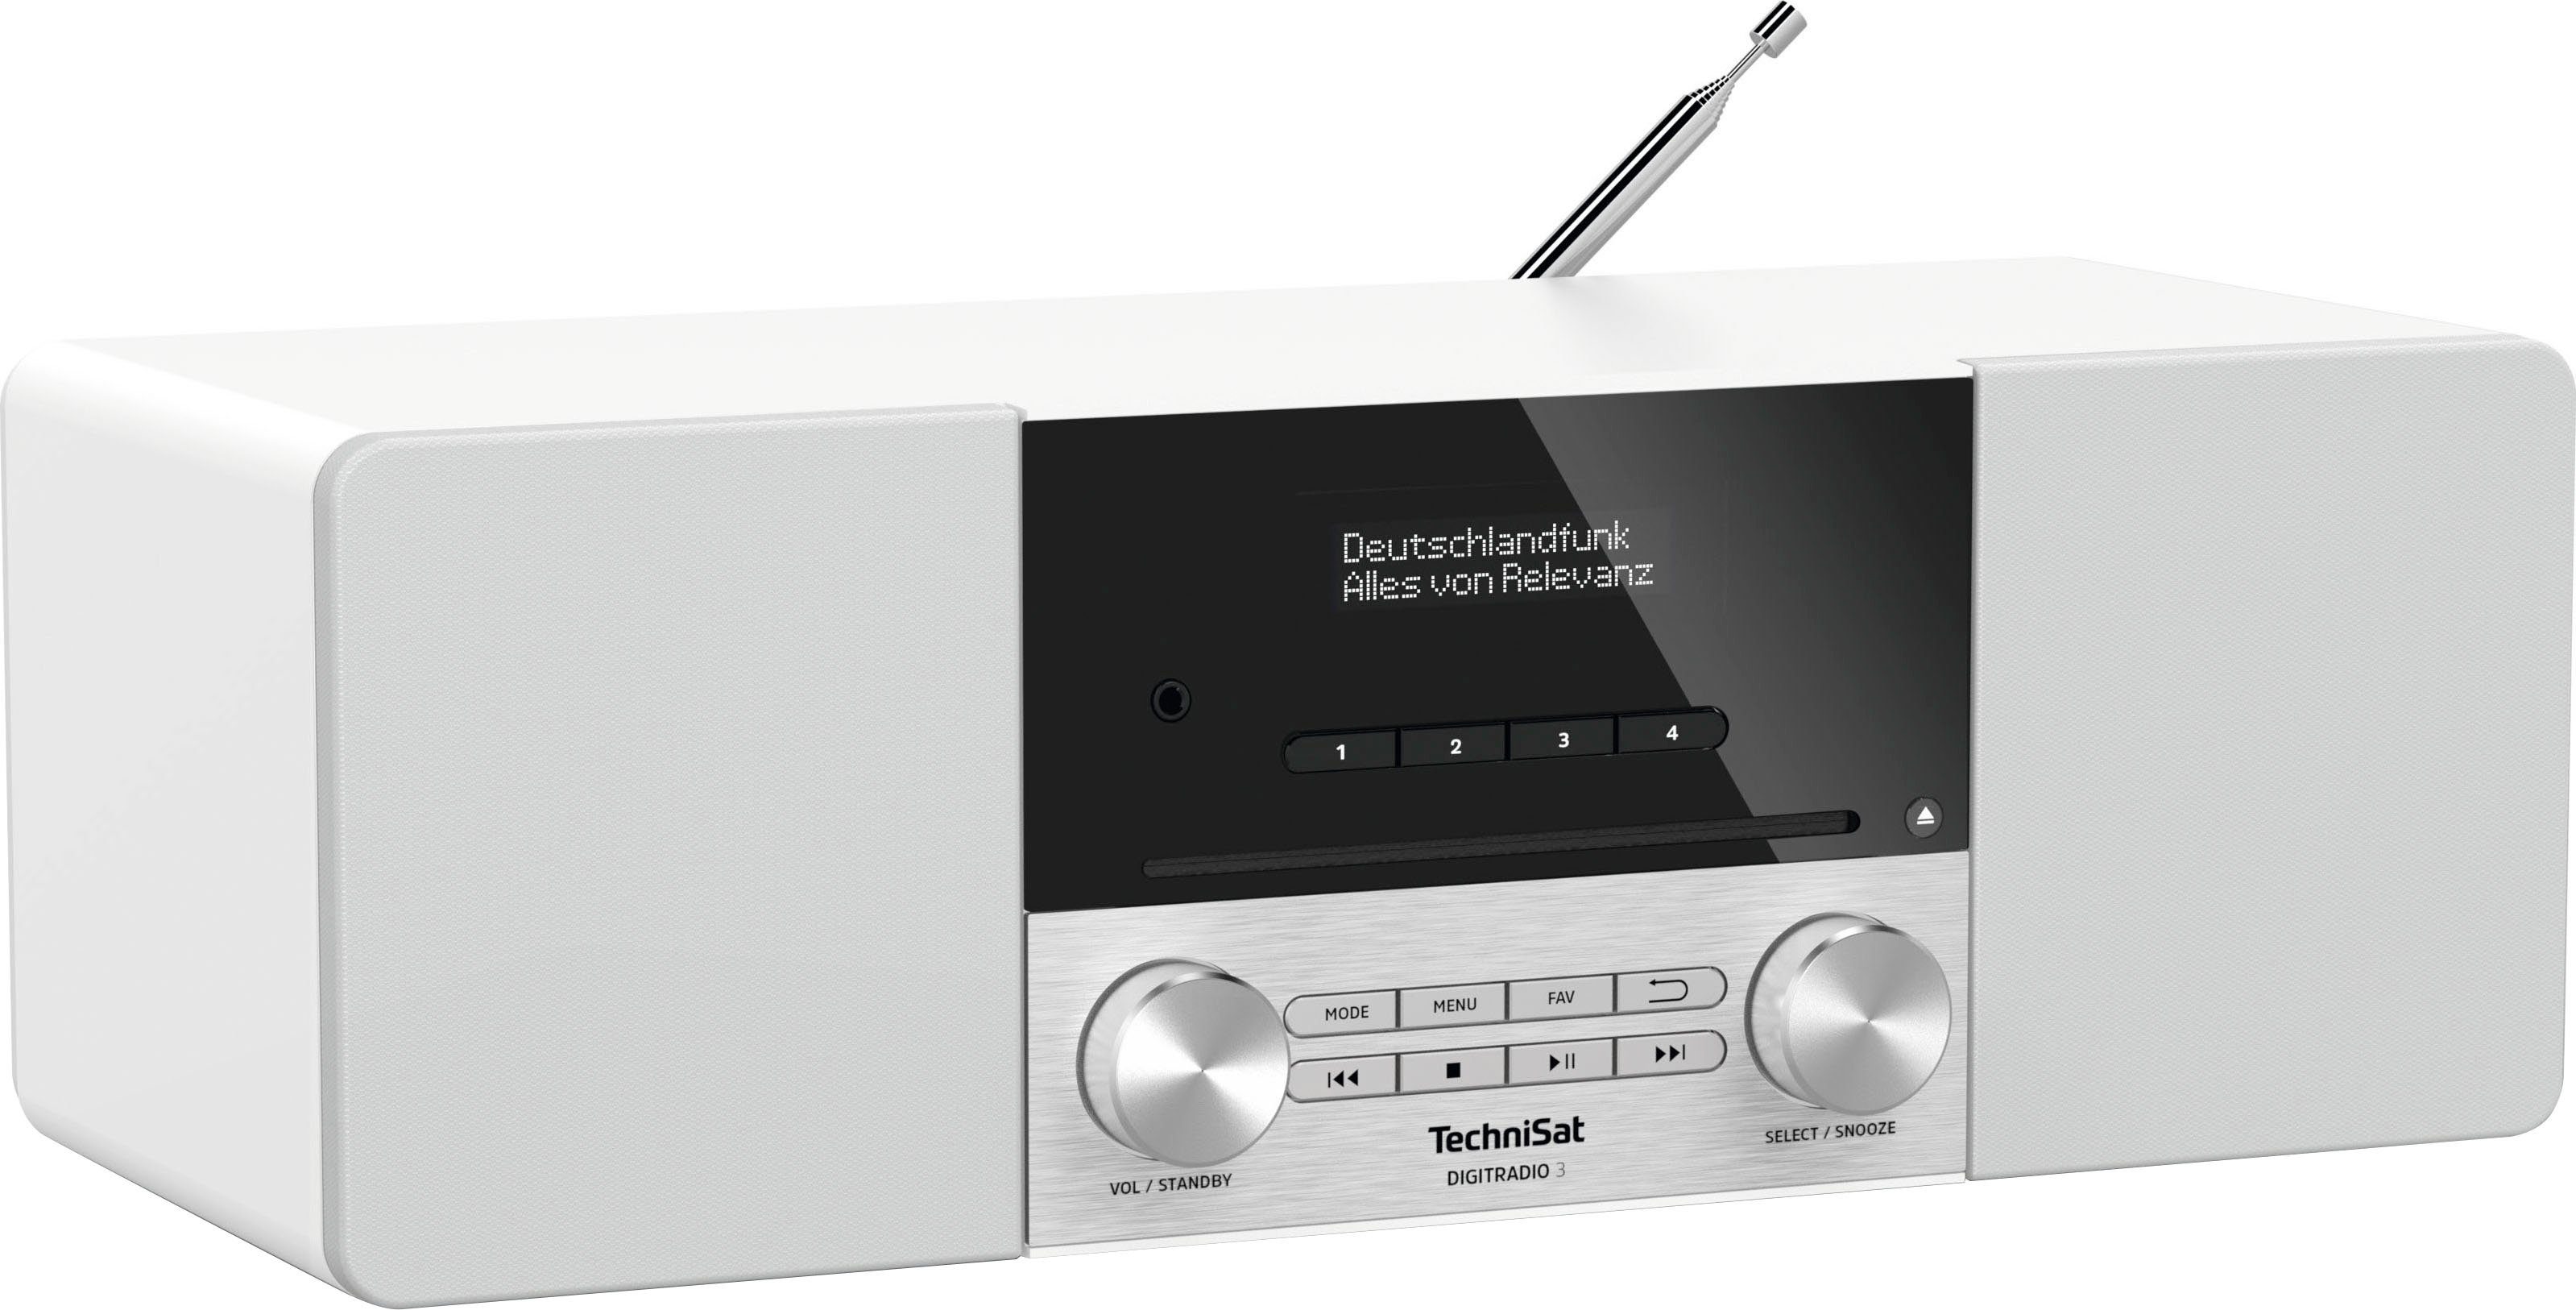 Digitalradio DIGITRADIO Made 3 (DAB) TechniSat RDS, in weiß (Digitalradio CD-Player, UKW Germany) mit W, (DAB), 20